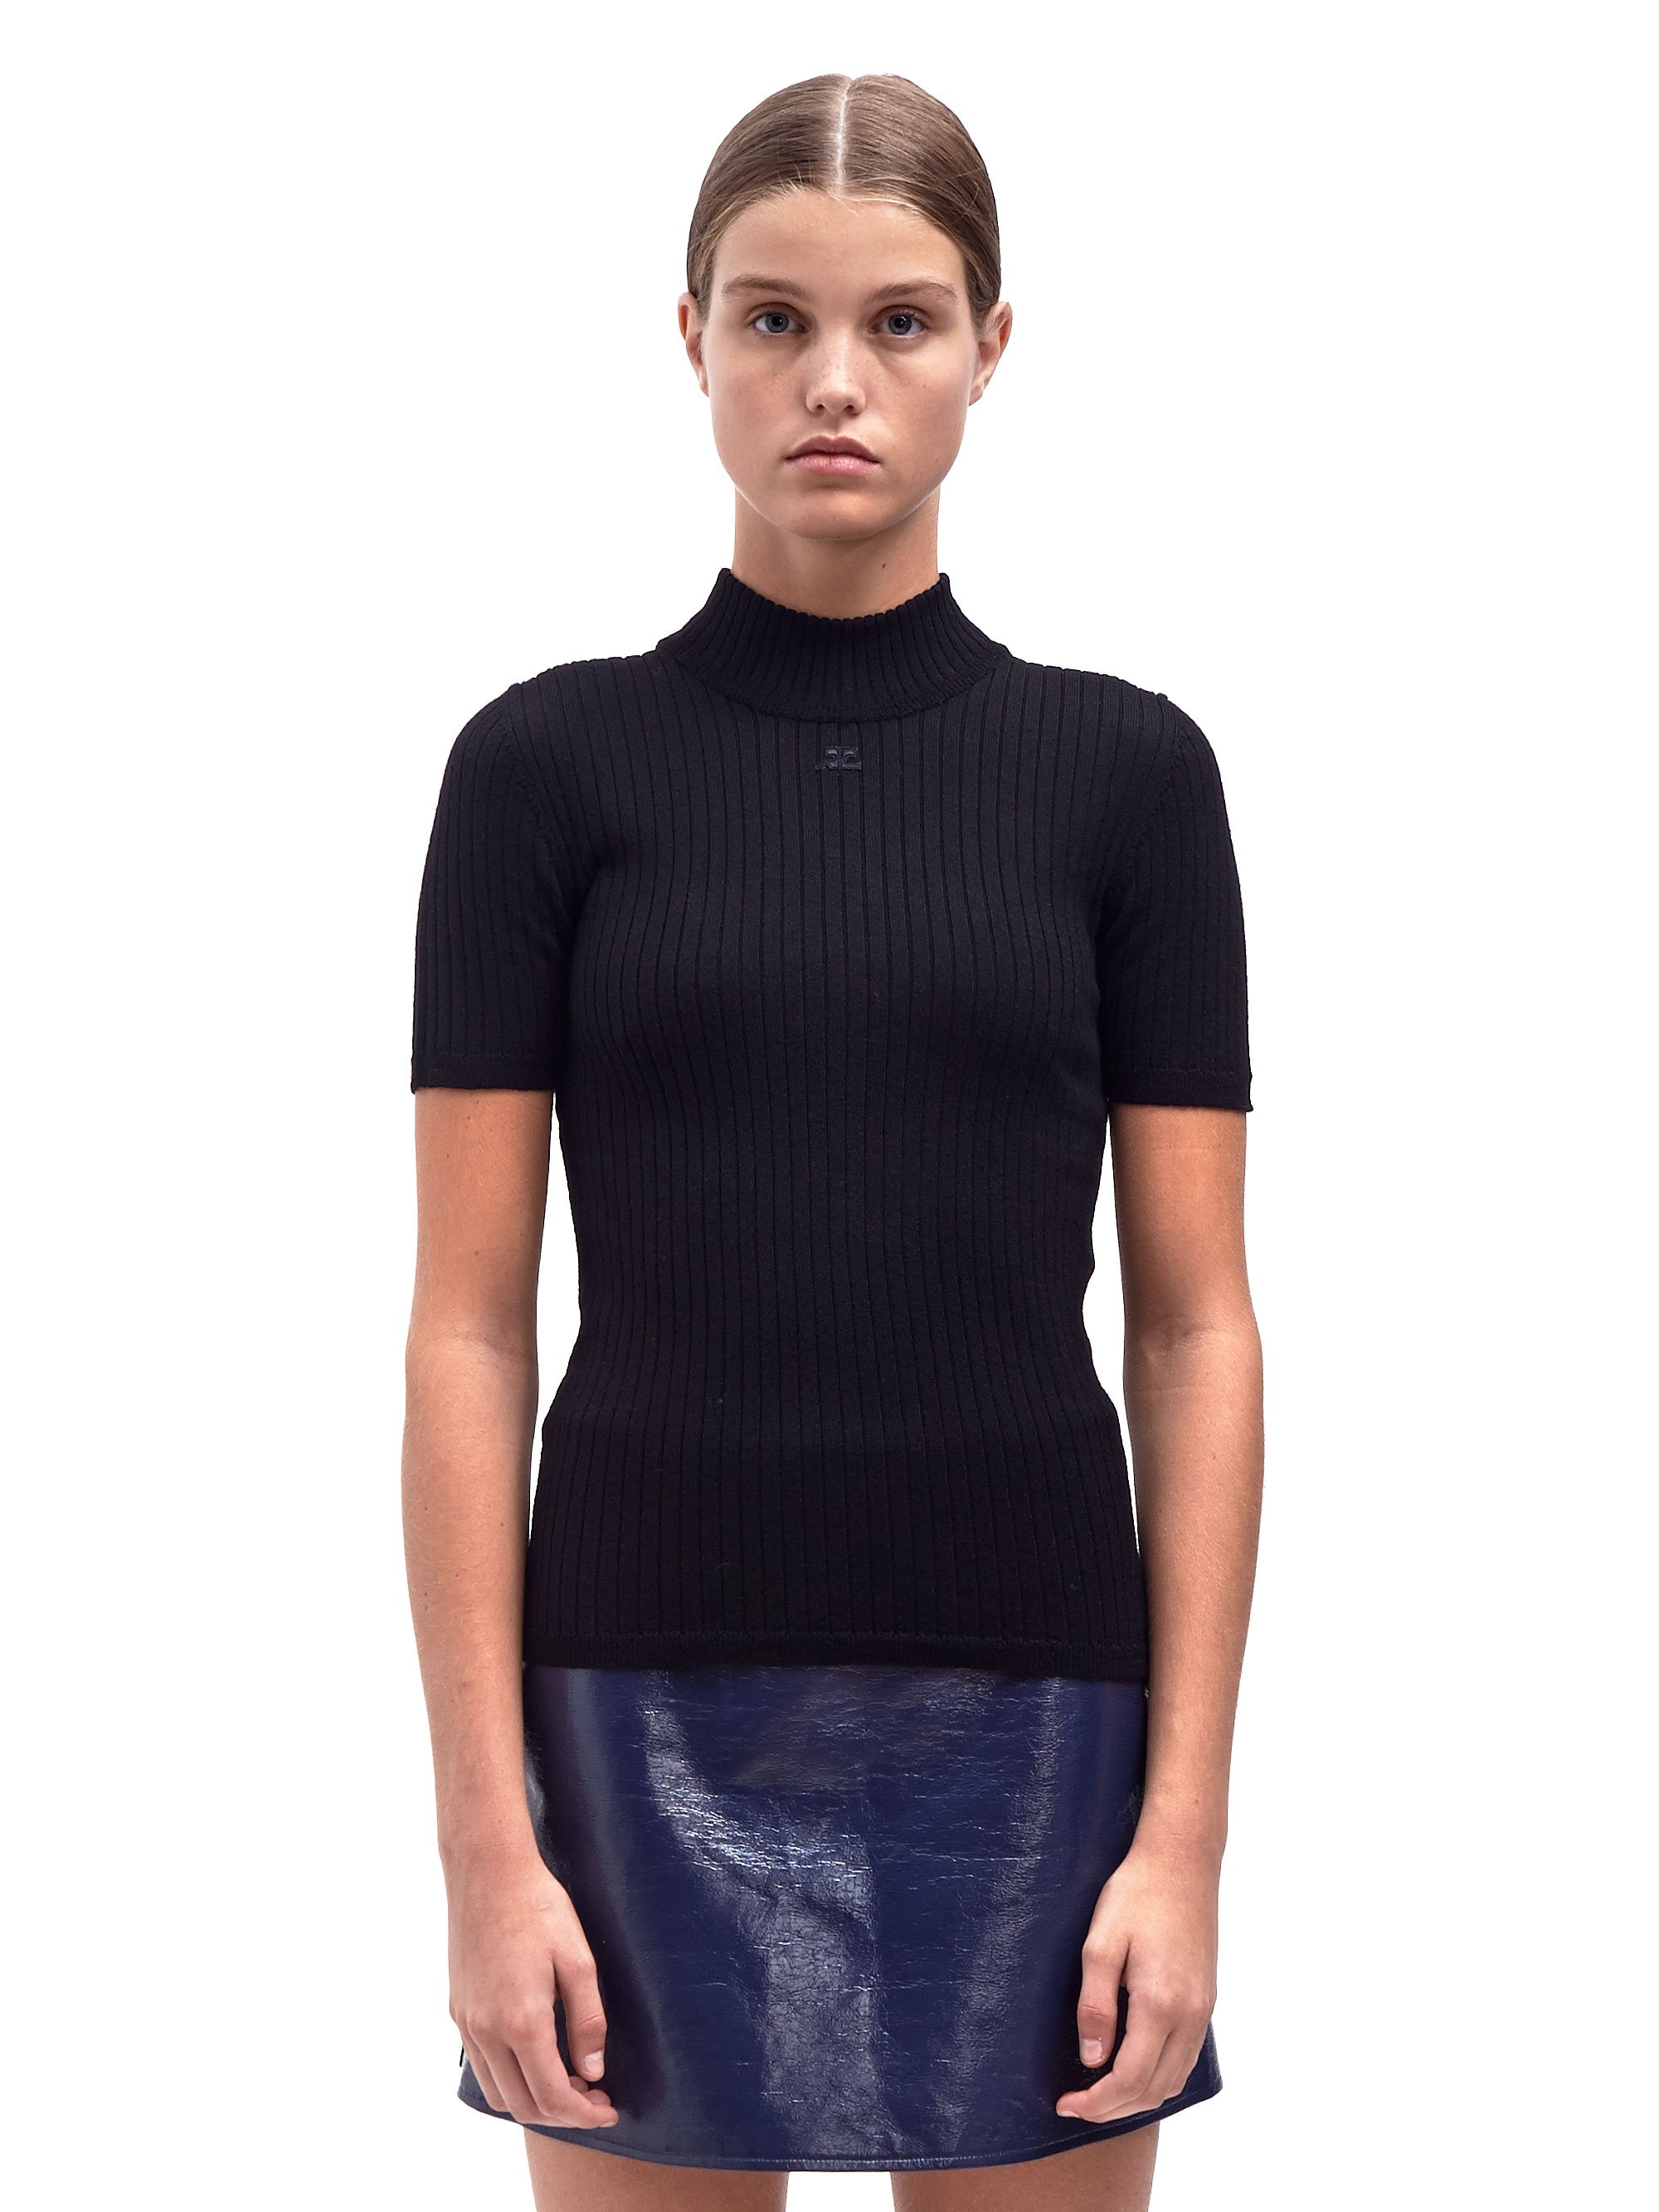 Womens black short cardigans sweater price